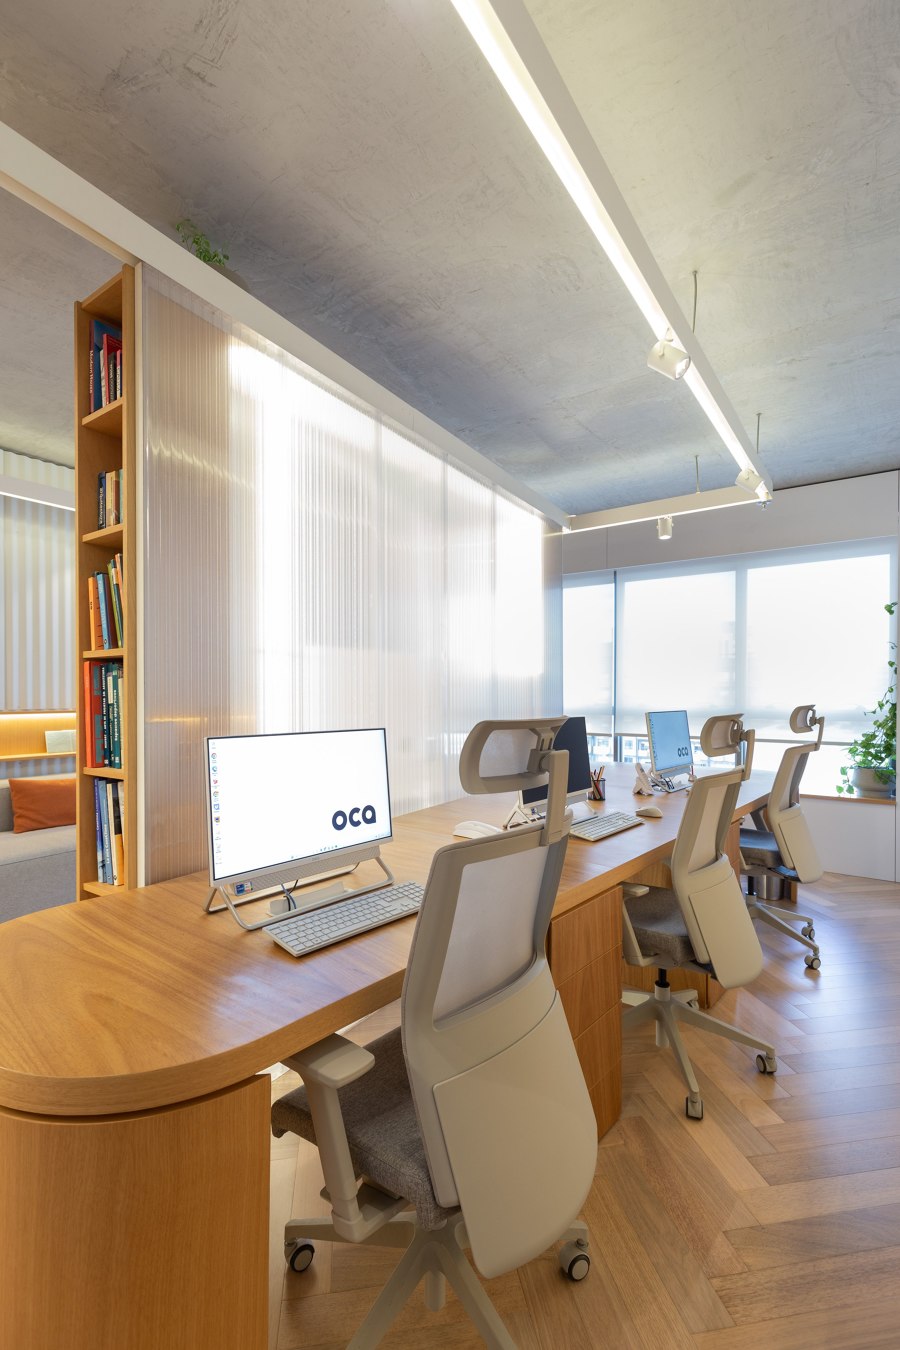 OCA Office Headquarters 03 by Oficina Conceito Arquitetura | Office facilities